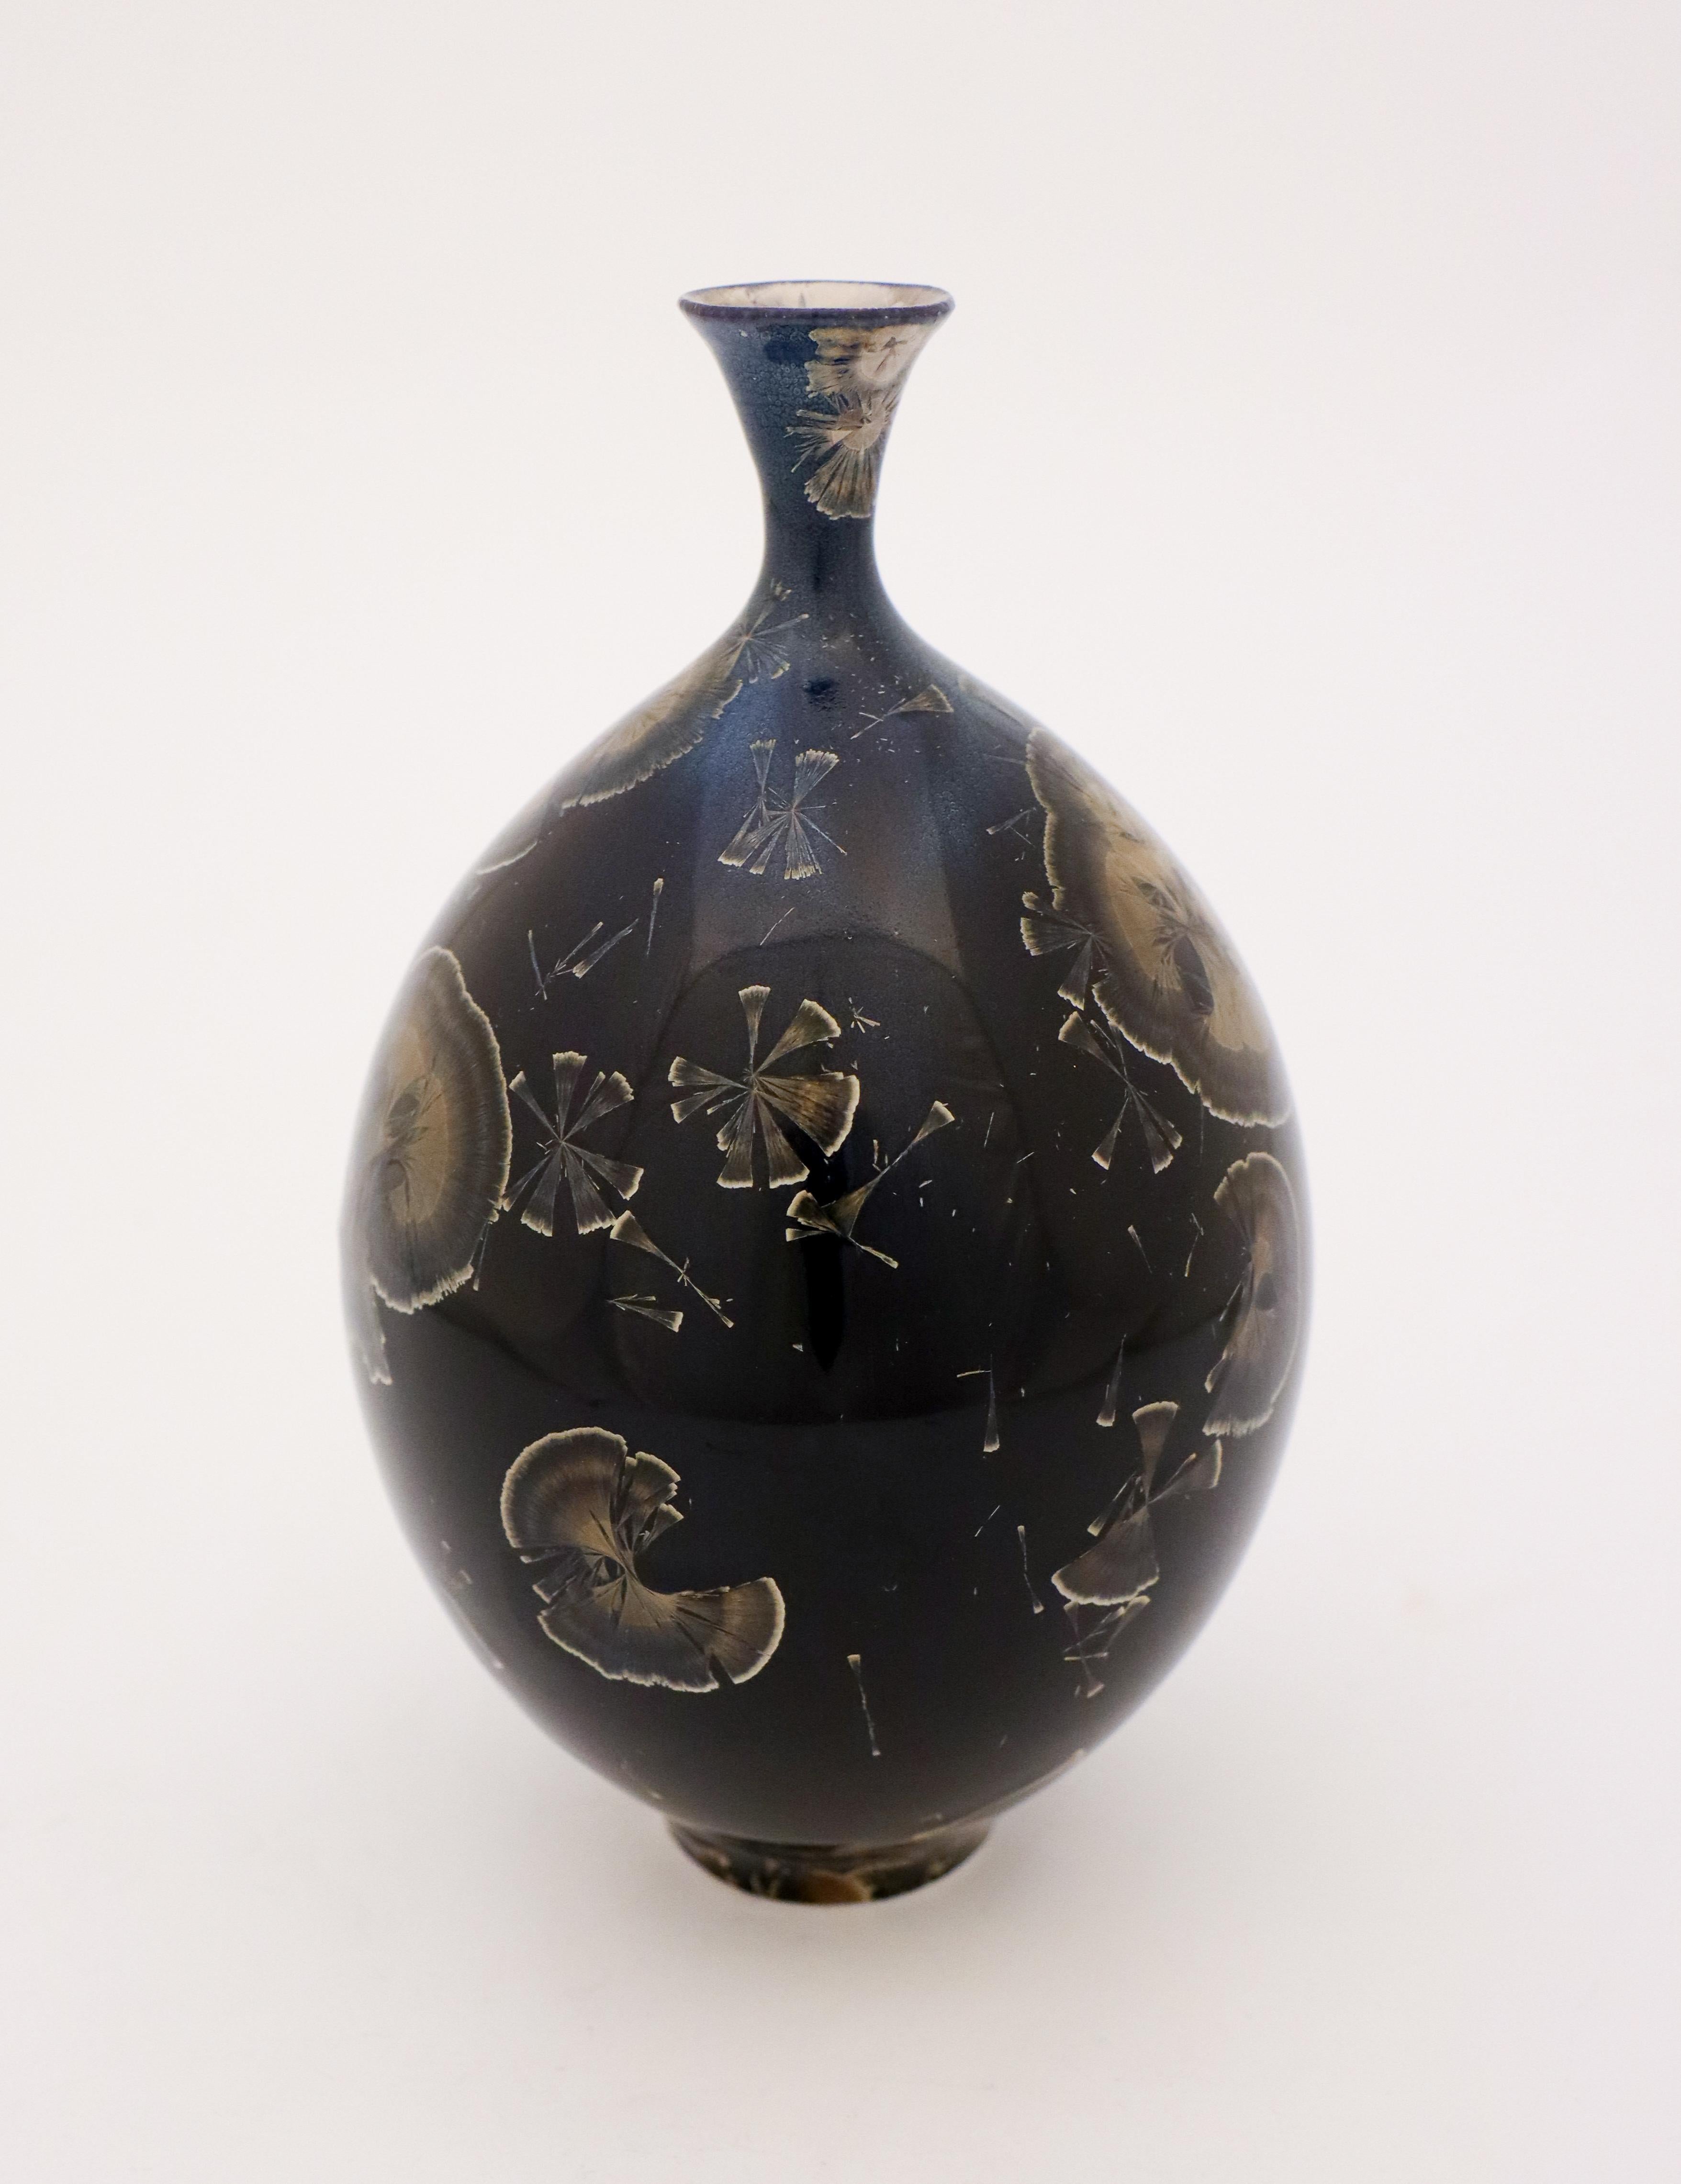 Scandinavian Modern Isak Isaksson, Vase with Crystalline Glaze, Contemporary Swedish Ceramicist